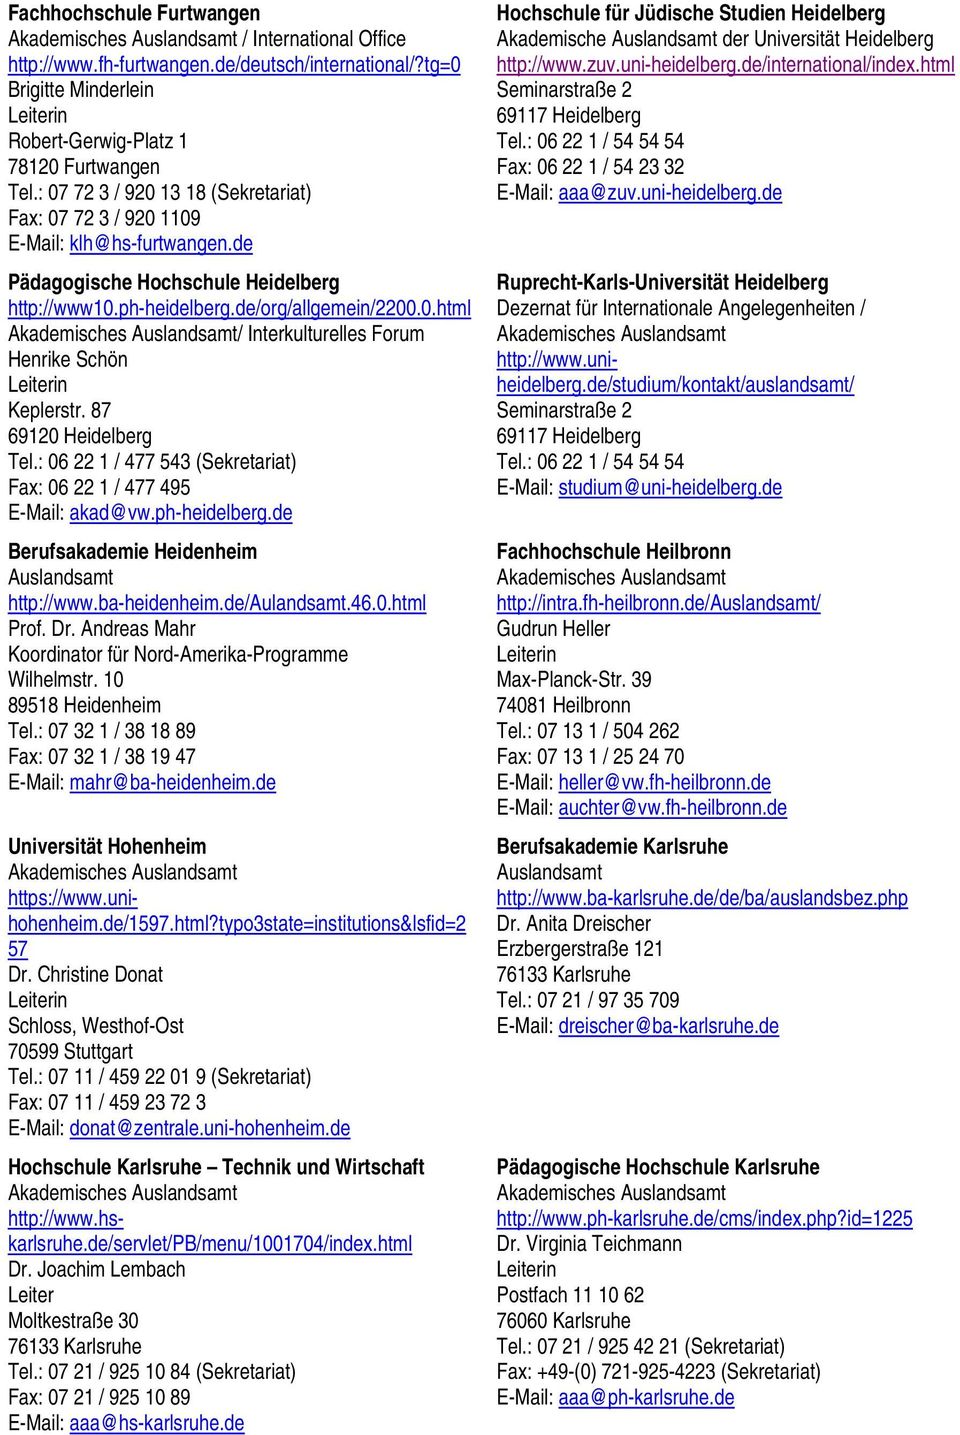 87 69120 Heidelberg Tel.: 06 22 1 / 477 543 (Sekretariat) Fax: 06 22 1 / 477 495 E-Mail: akad@vw.ph-heidelberg.de Berufsakademie Heidenheim http://www.ba-heidenheim.de/aulandsamt.46.0.html Prof. Dr.